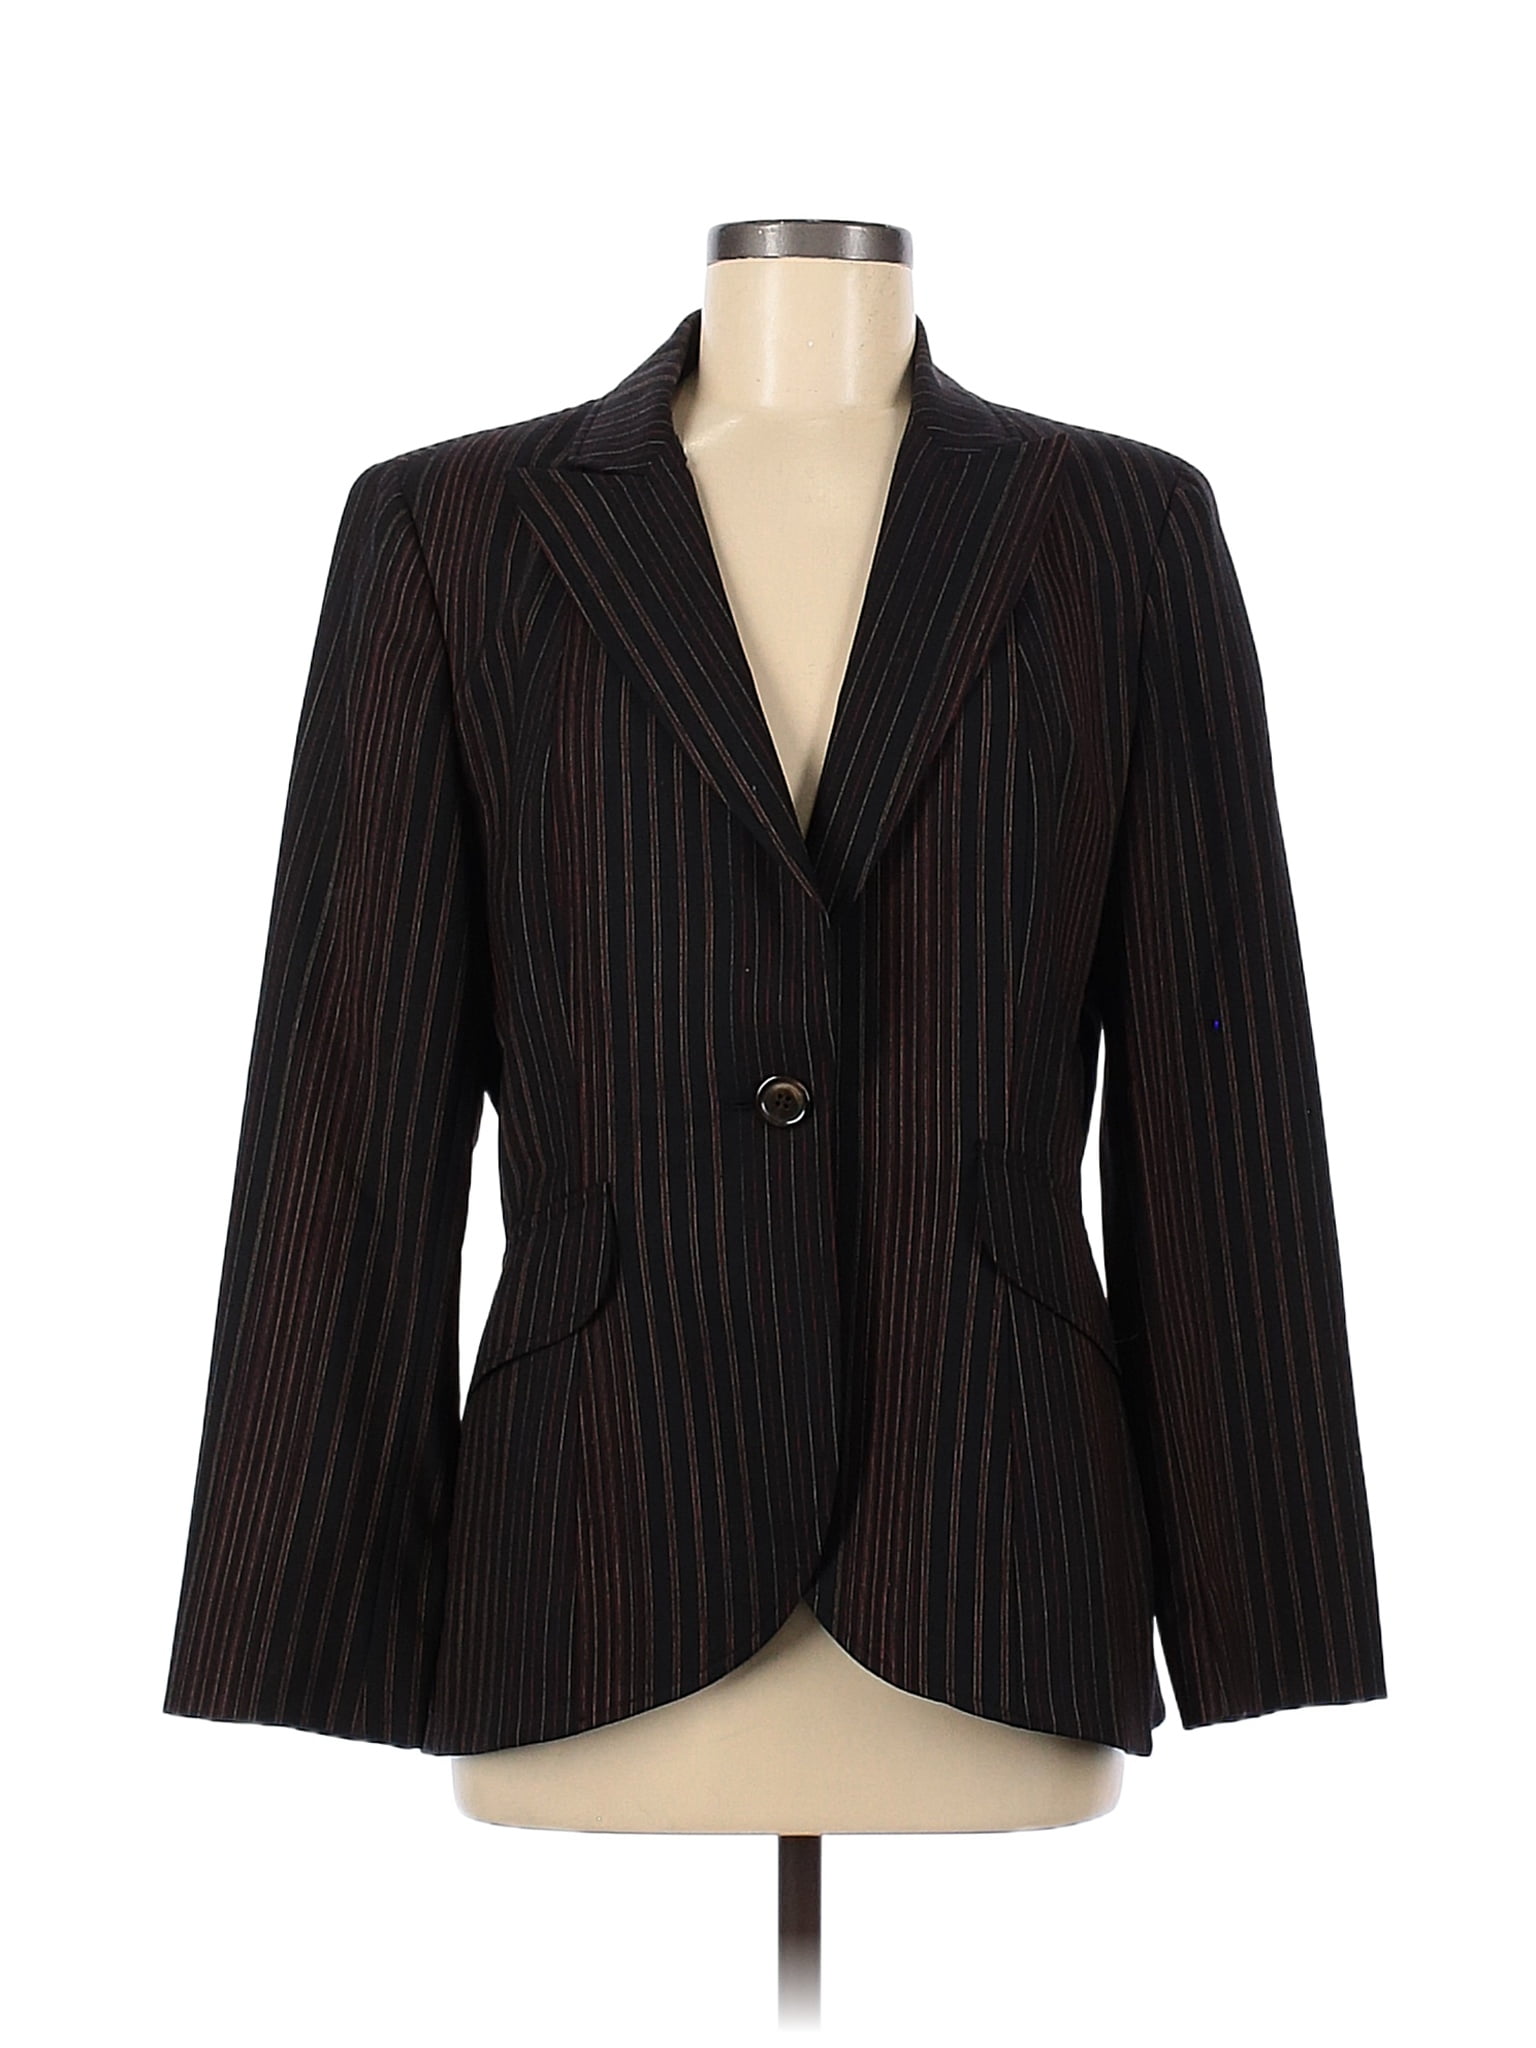 Jones New York Stripes Black Wool Blazer Size 8 - 89% off | ThredUp